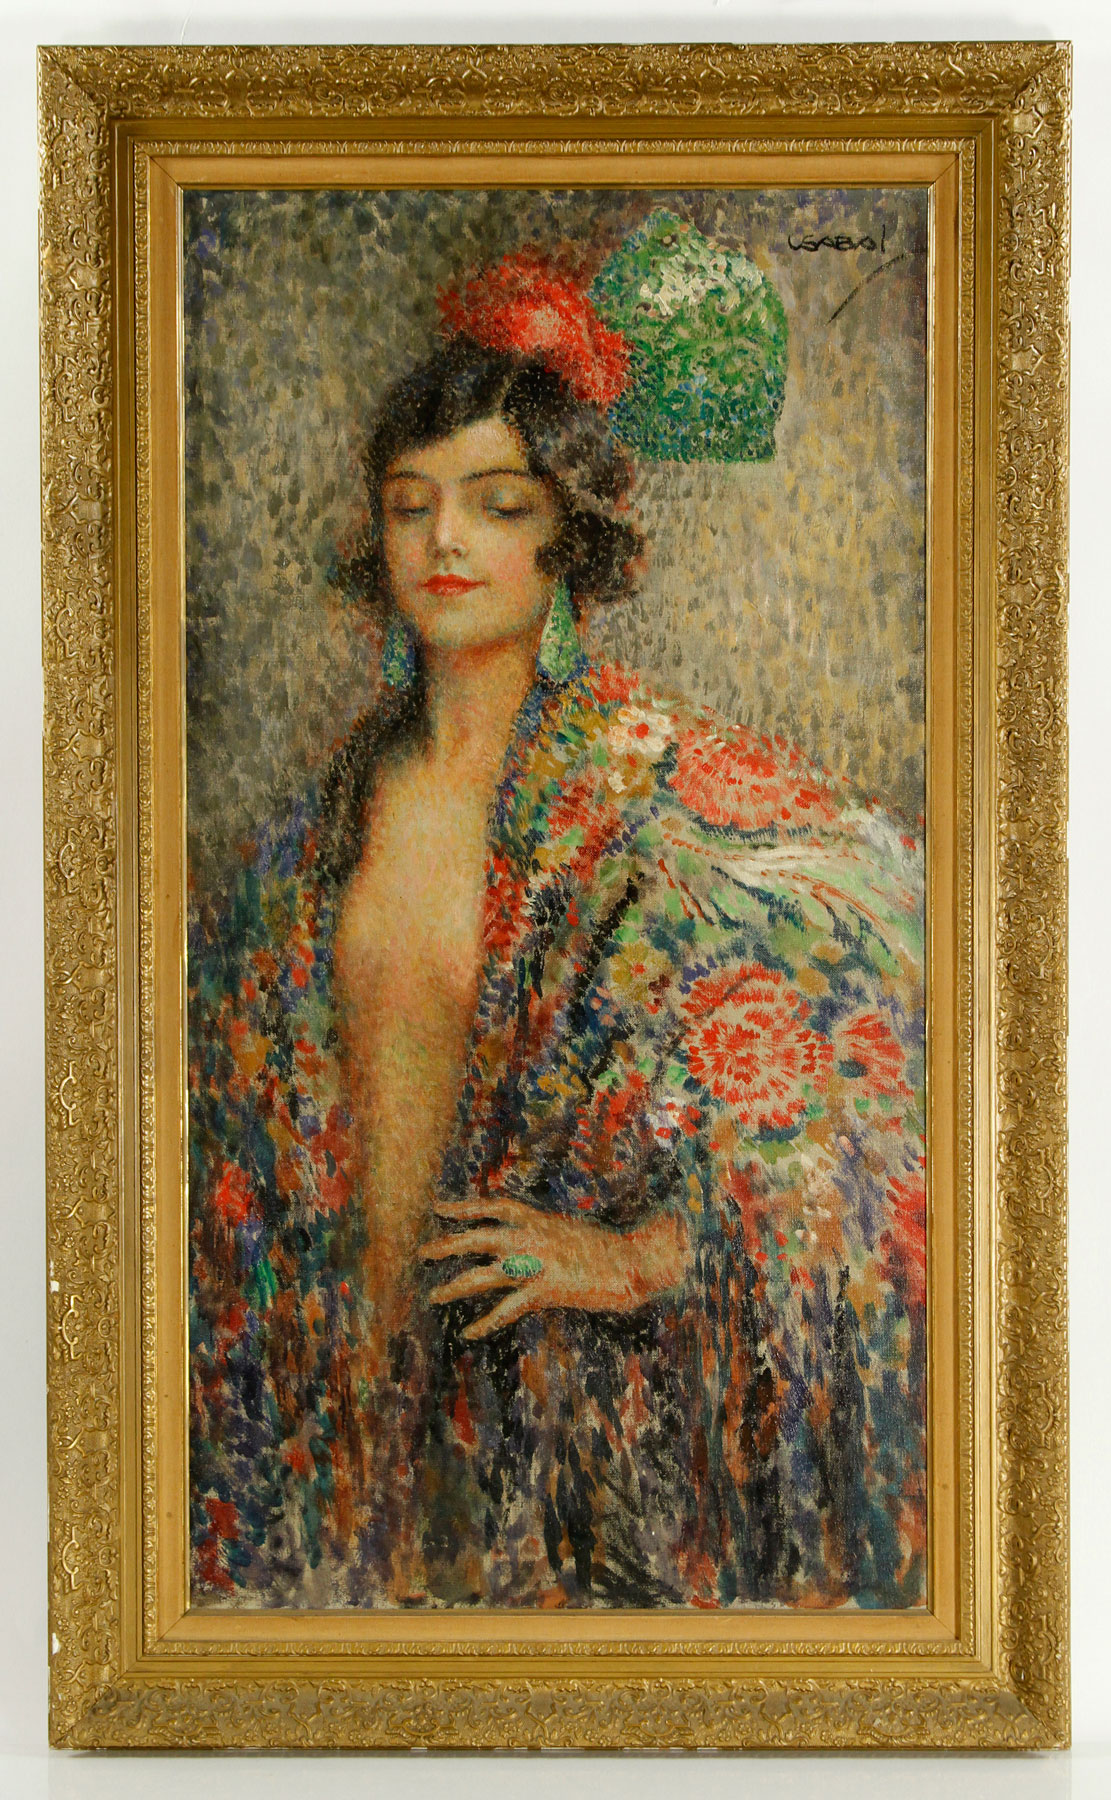 Vsabal y Hernandez, "Hermosa Mujer," Oil on Canvas